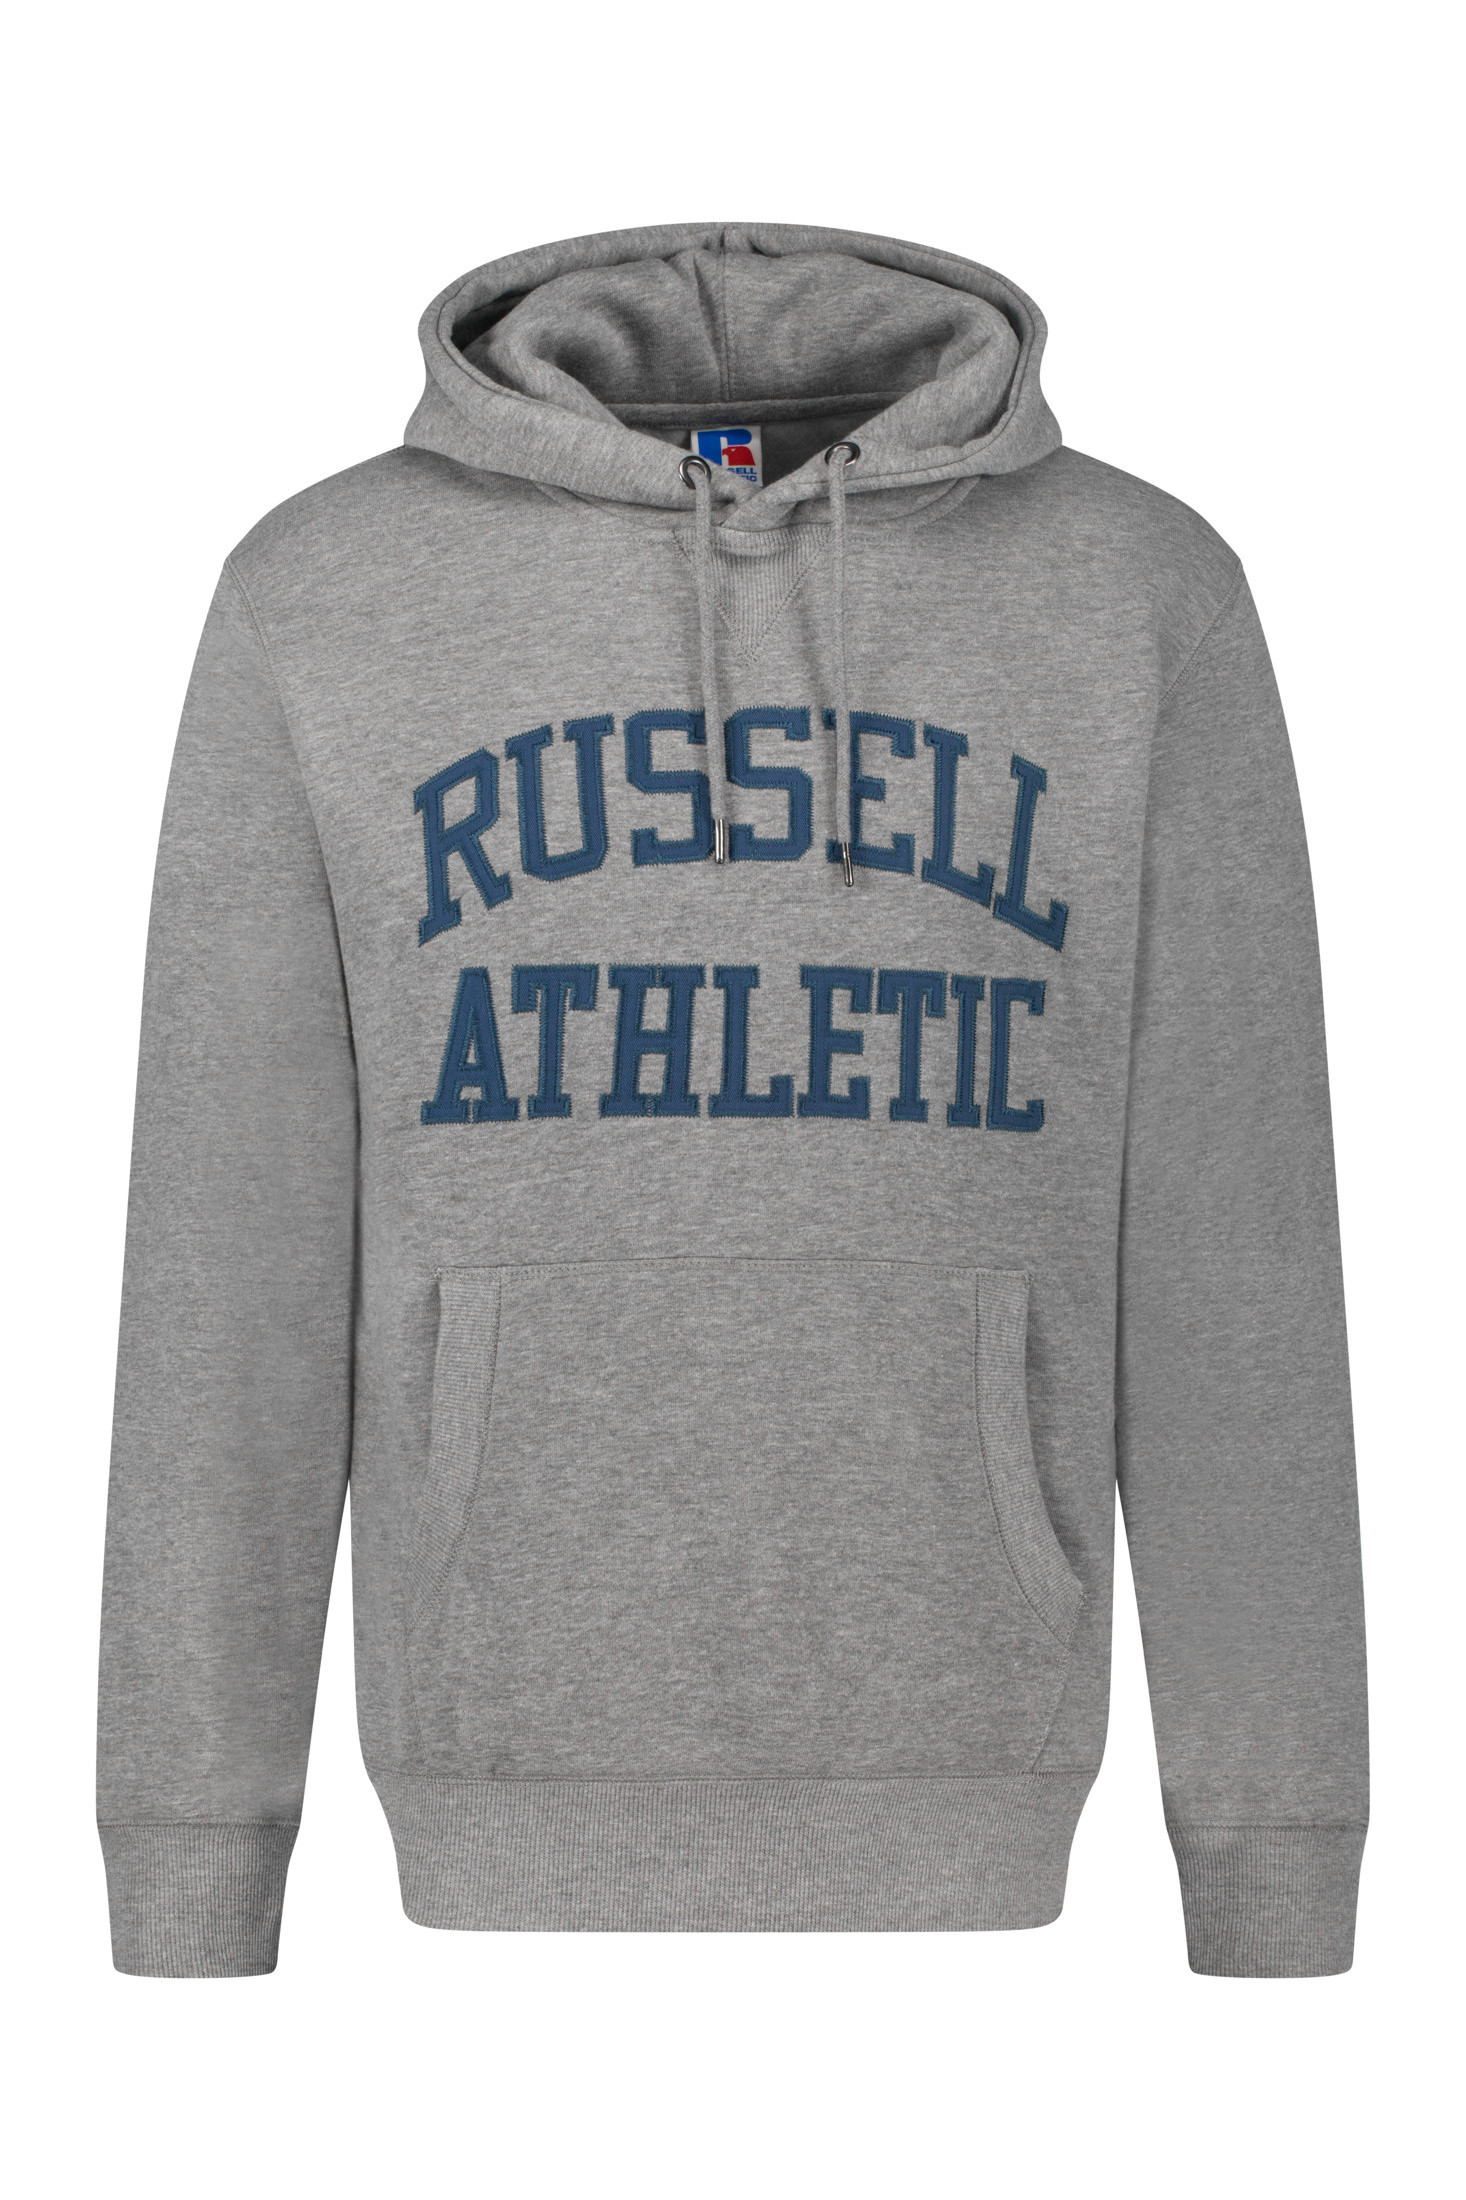 Russell Athletic - Felpa con cappuccio, Grigio chiaro, large image number 0